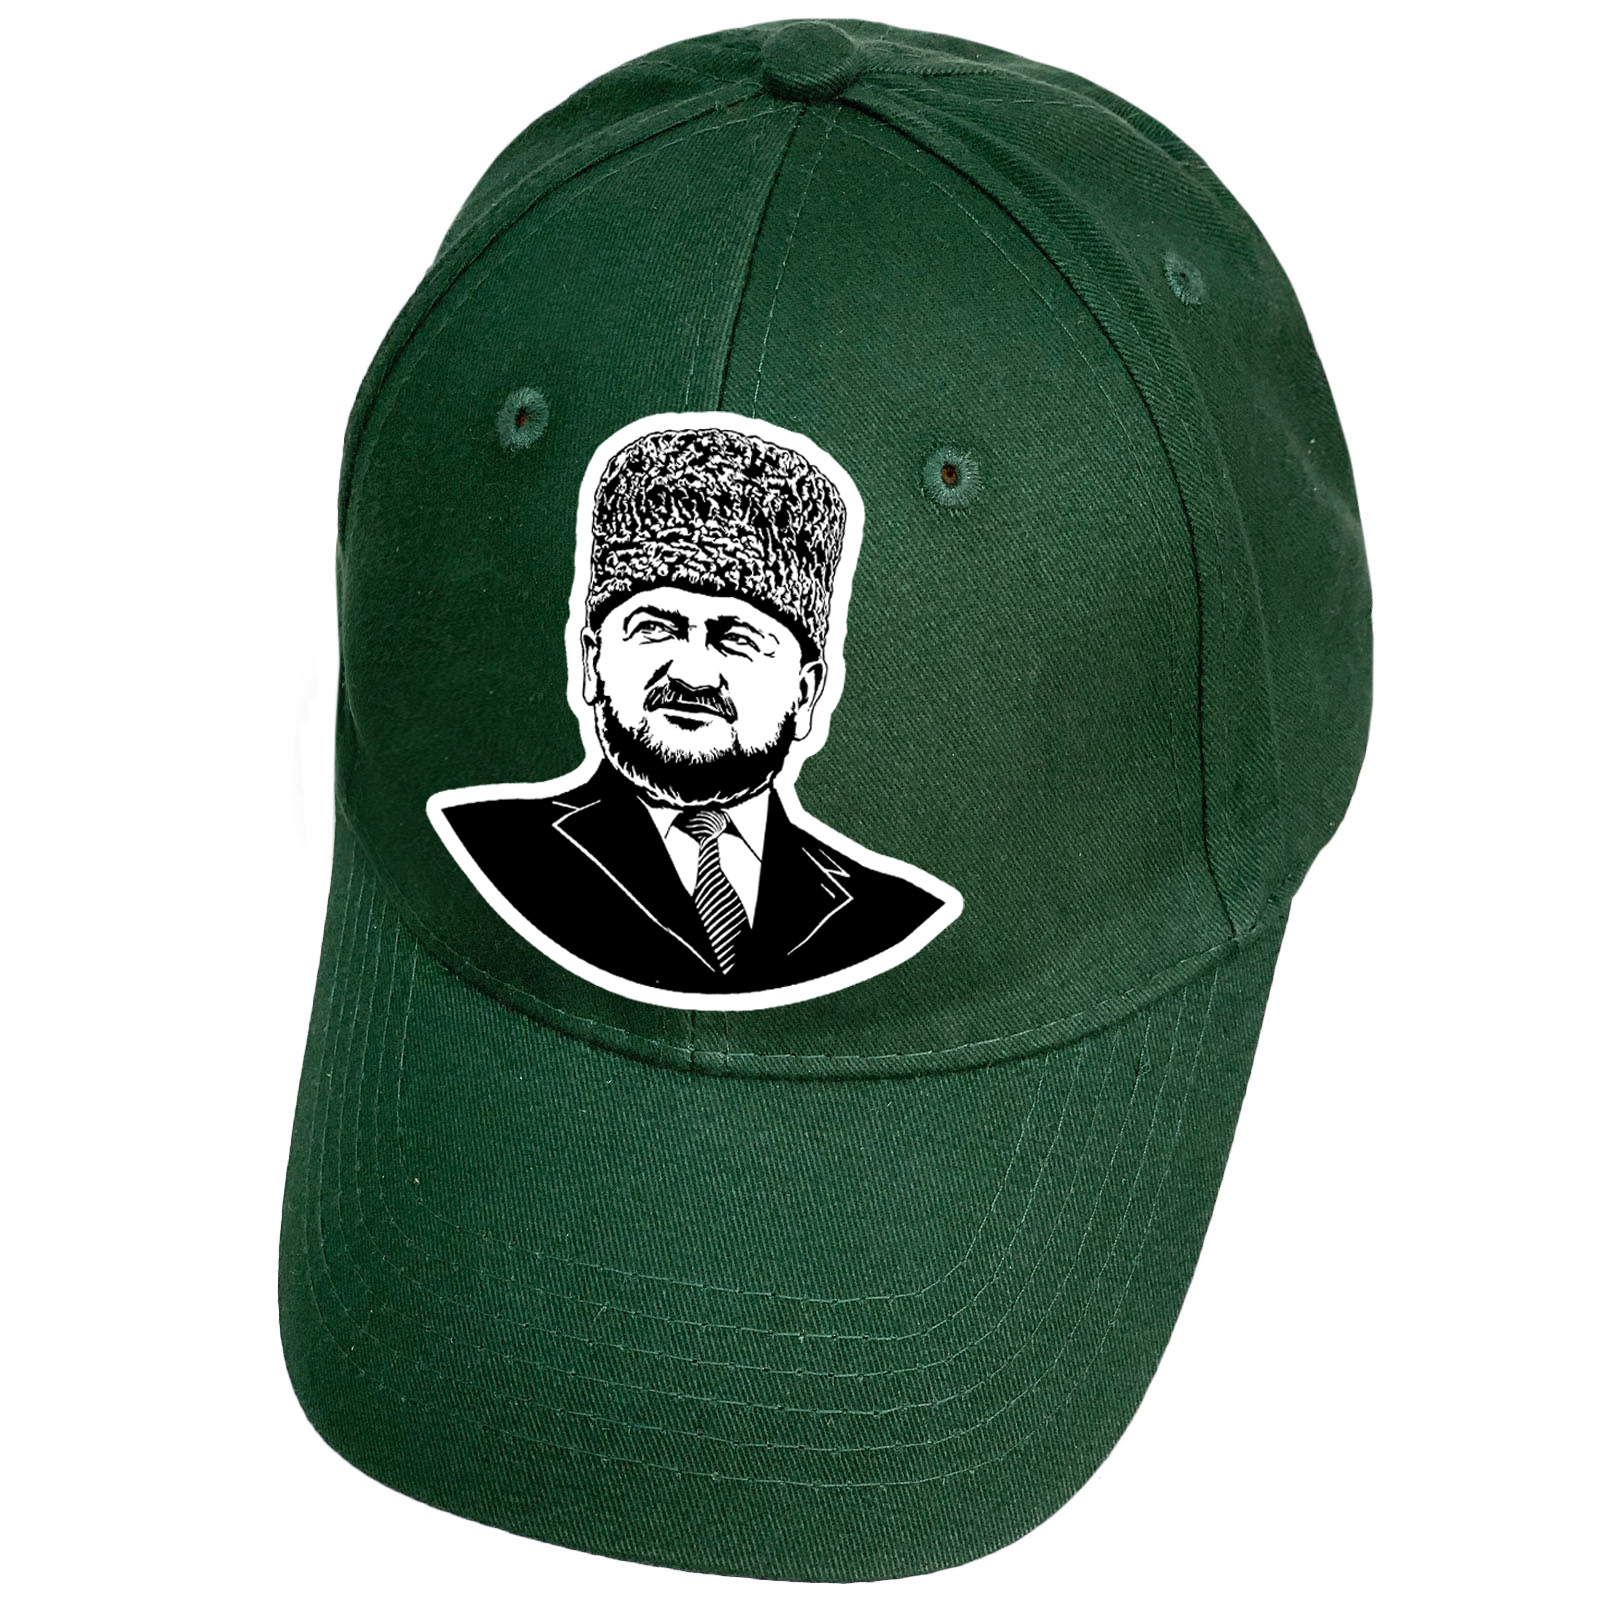 Зеленая кепка с портретом Ахмата Кадырова 